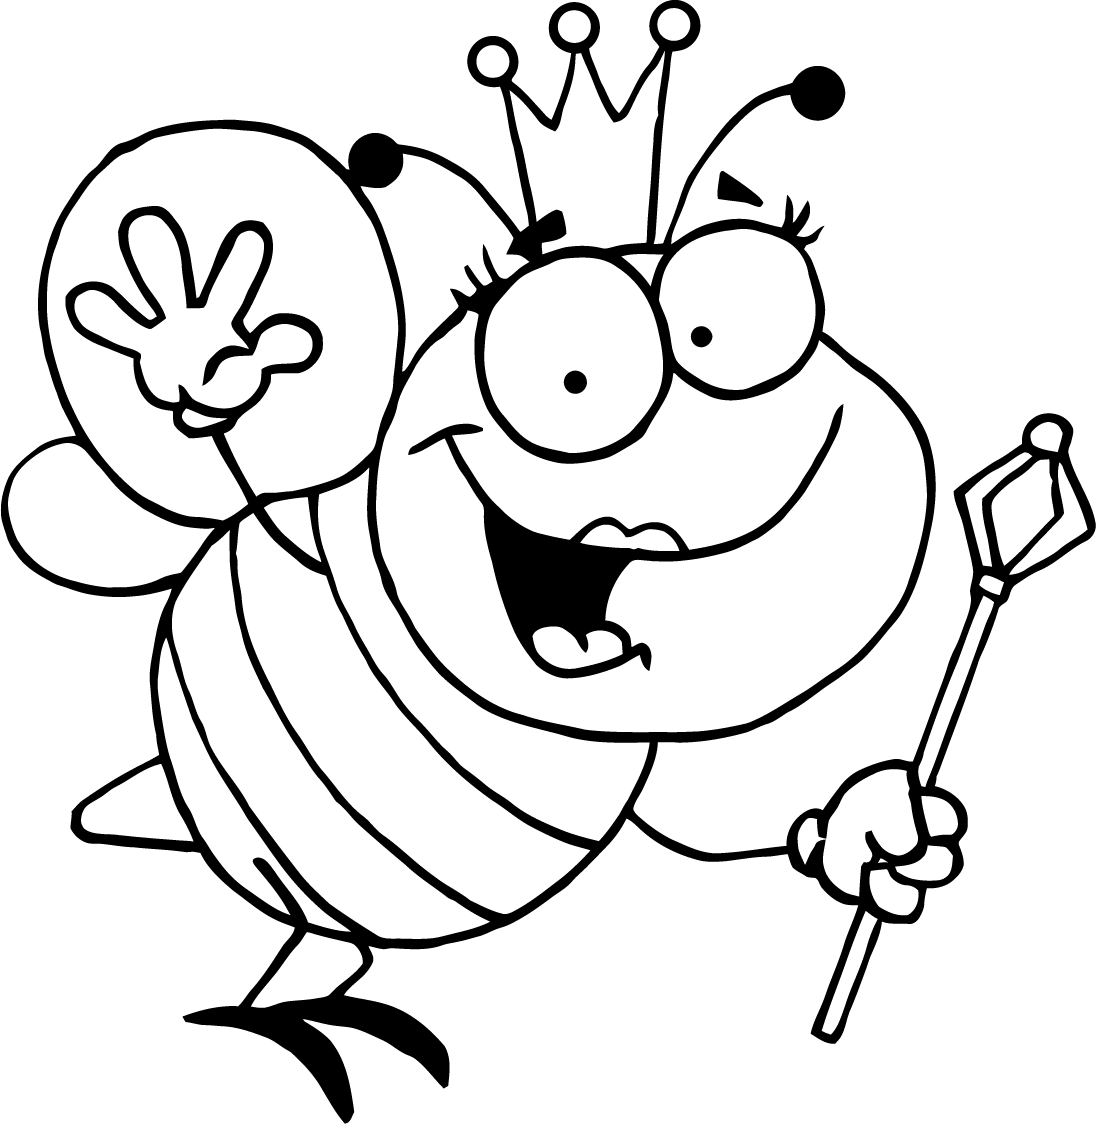 bumble bee coloring sheets free printable bumble bee coloring pages for kids sheets bumble bee coloring 